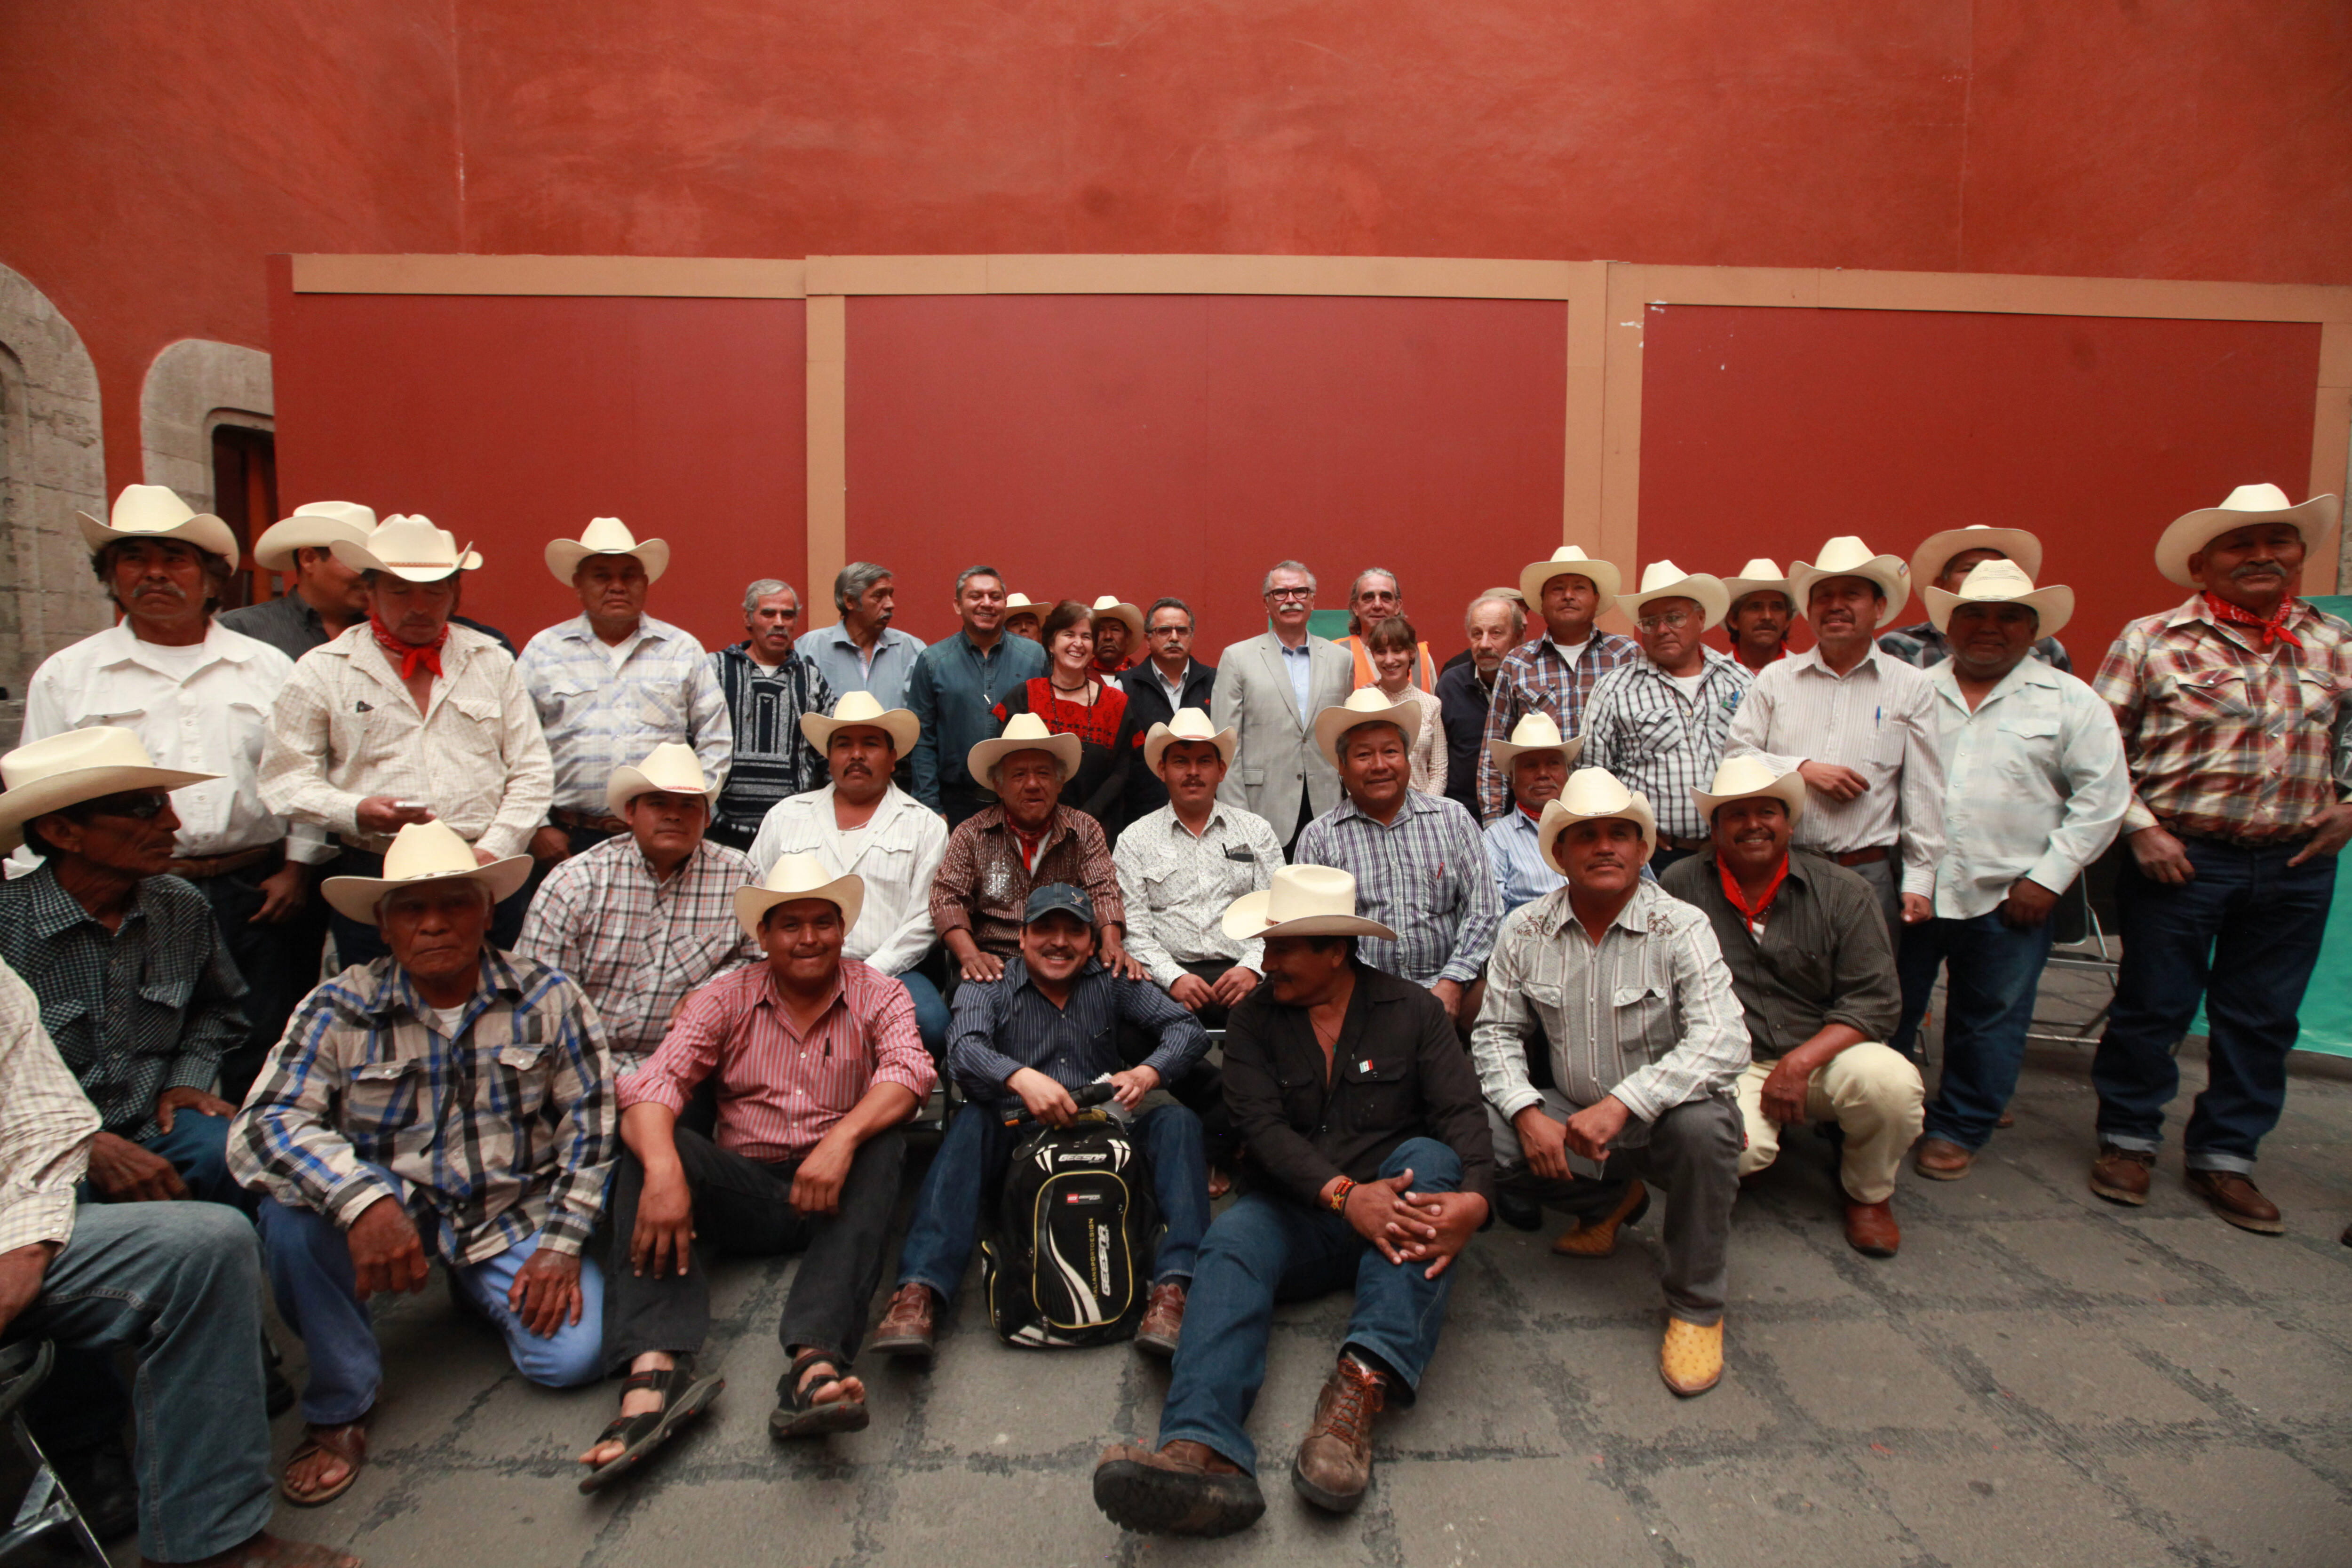 Representatives of indigenous tribe, Yaqui